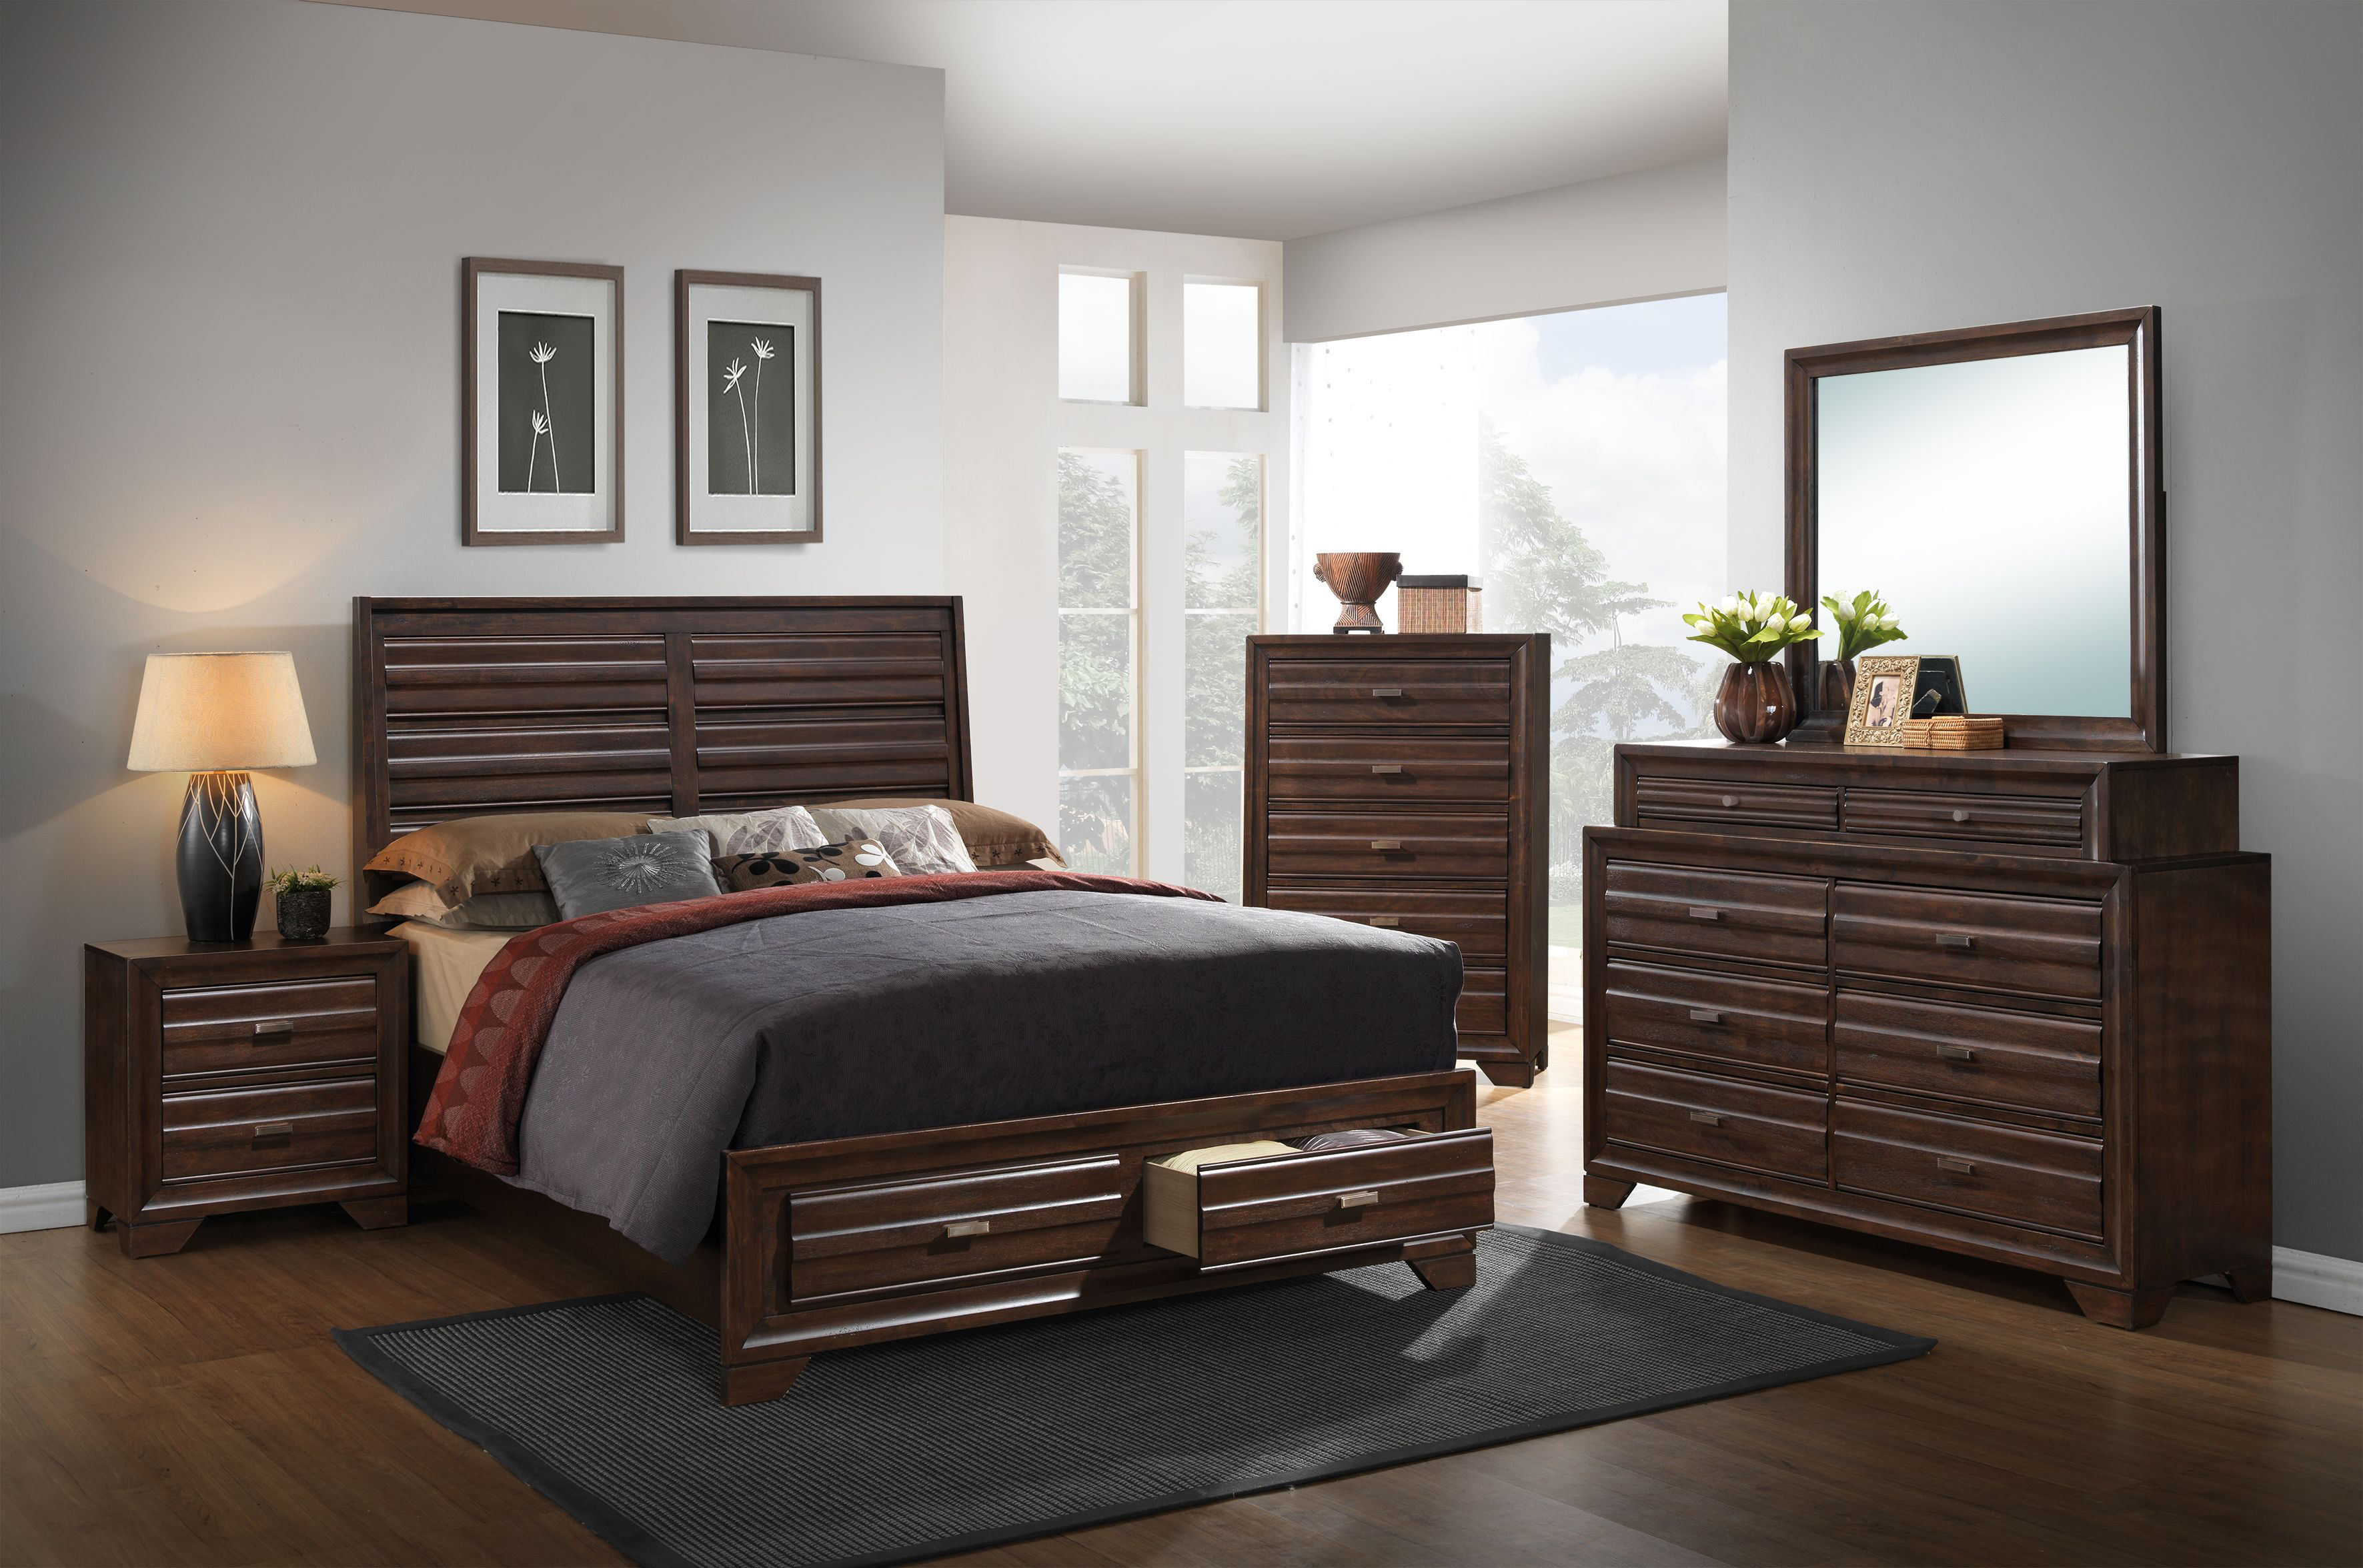 old fashioned walnut bedroom furniture